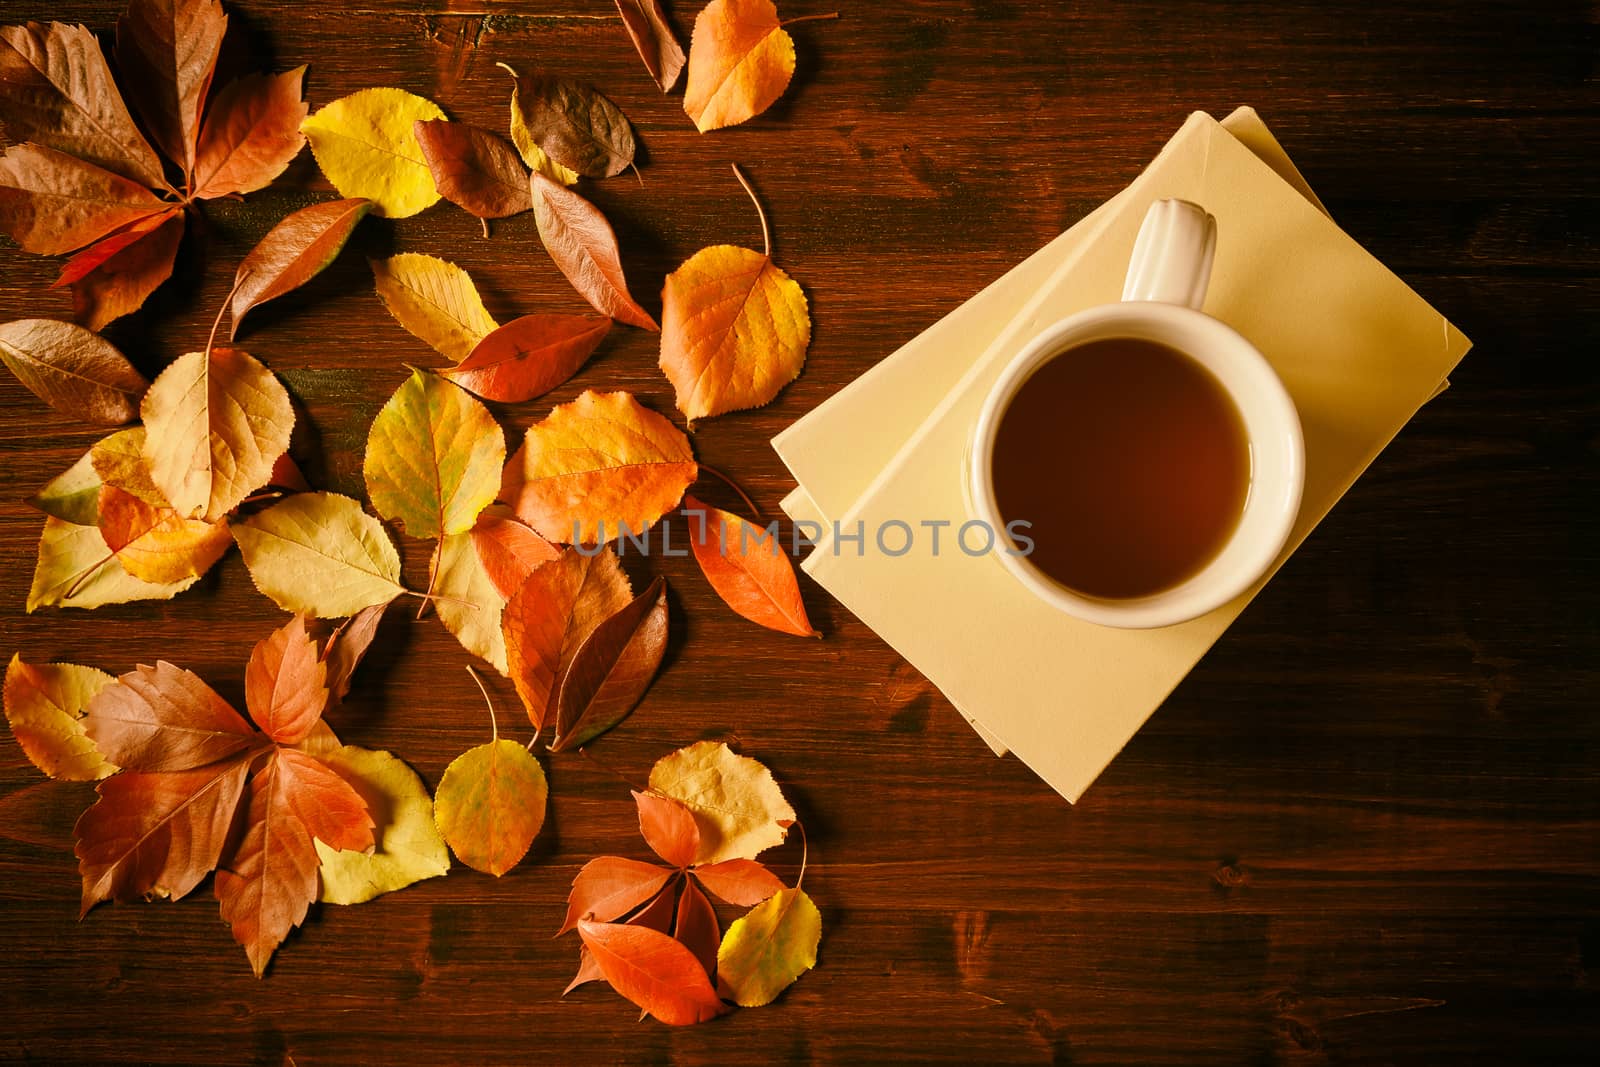 Cup of tea, books and autumnal foliage by LuigiMorbidelli